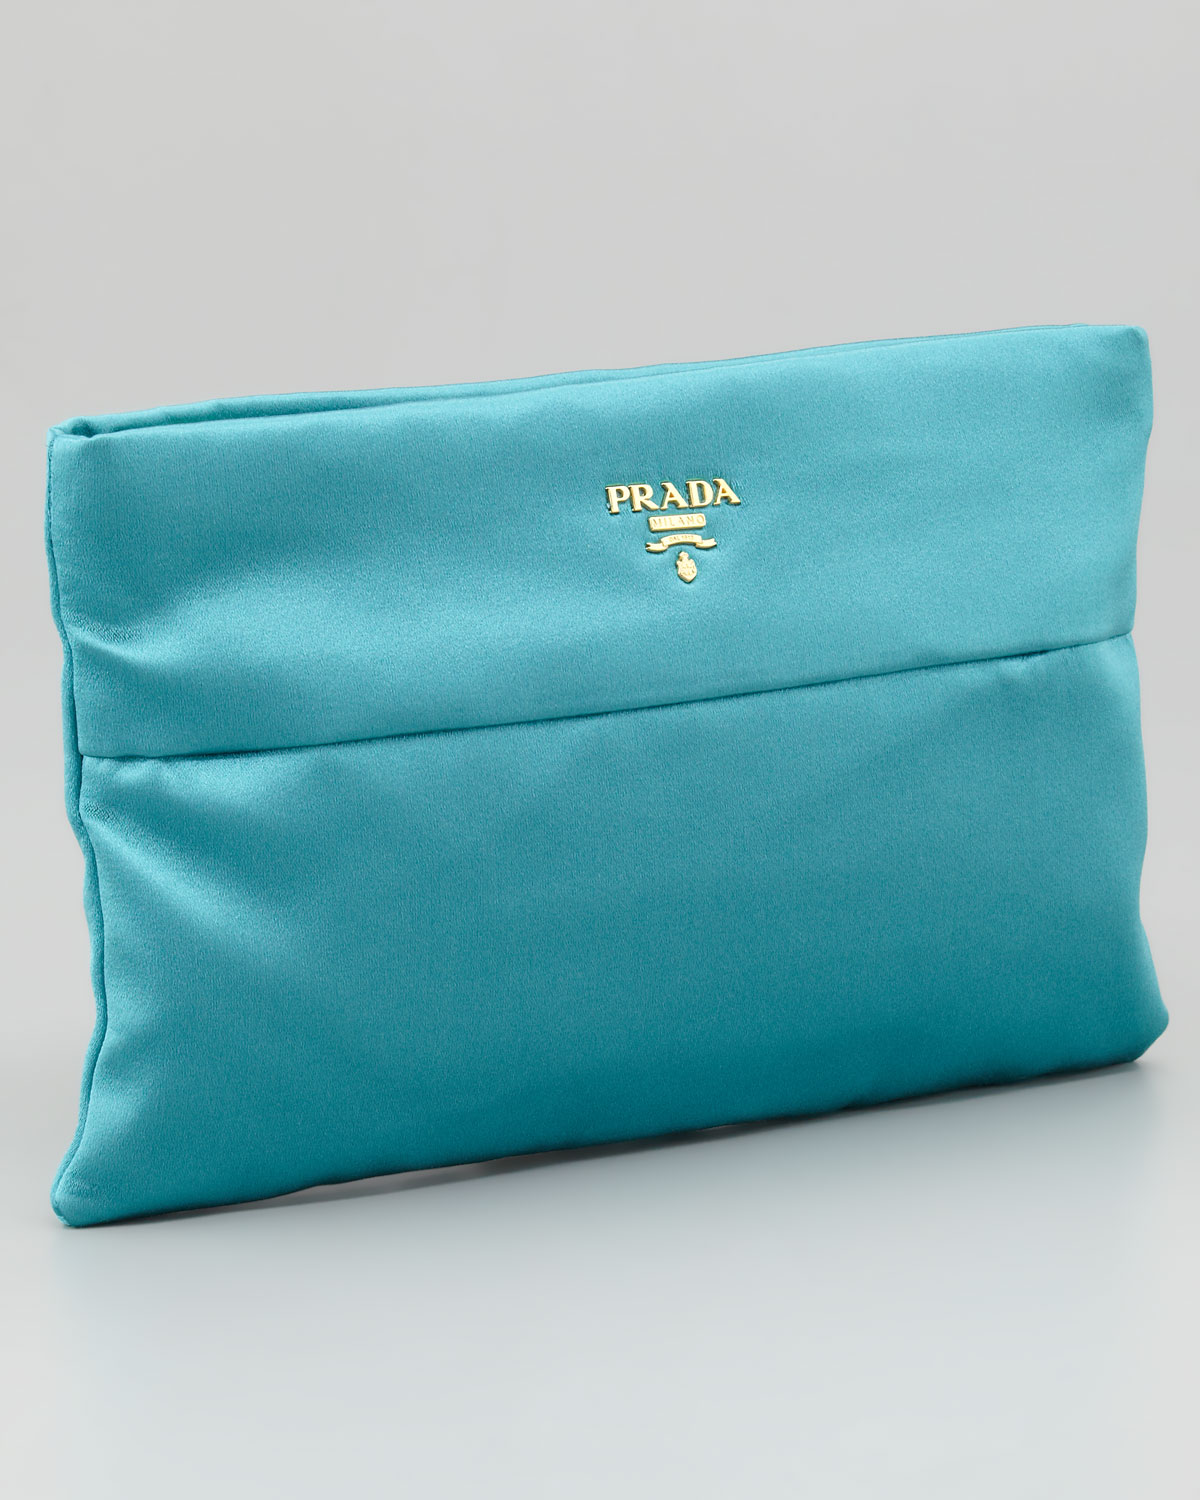 Prada Satin Clutch Bag in Blue (turquoise) | Lyst  